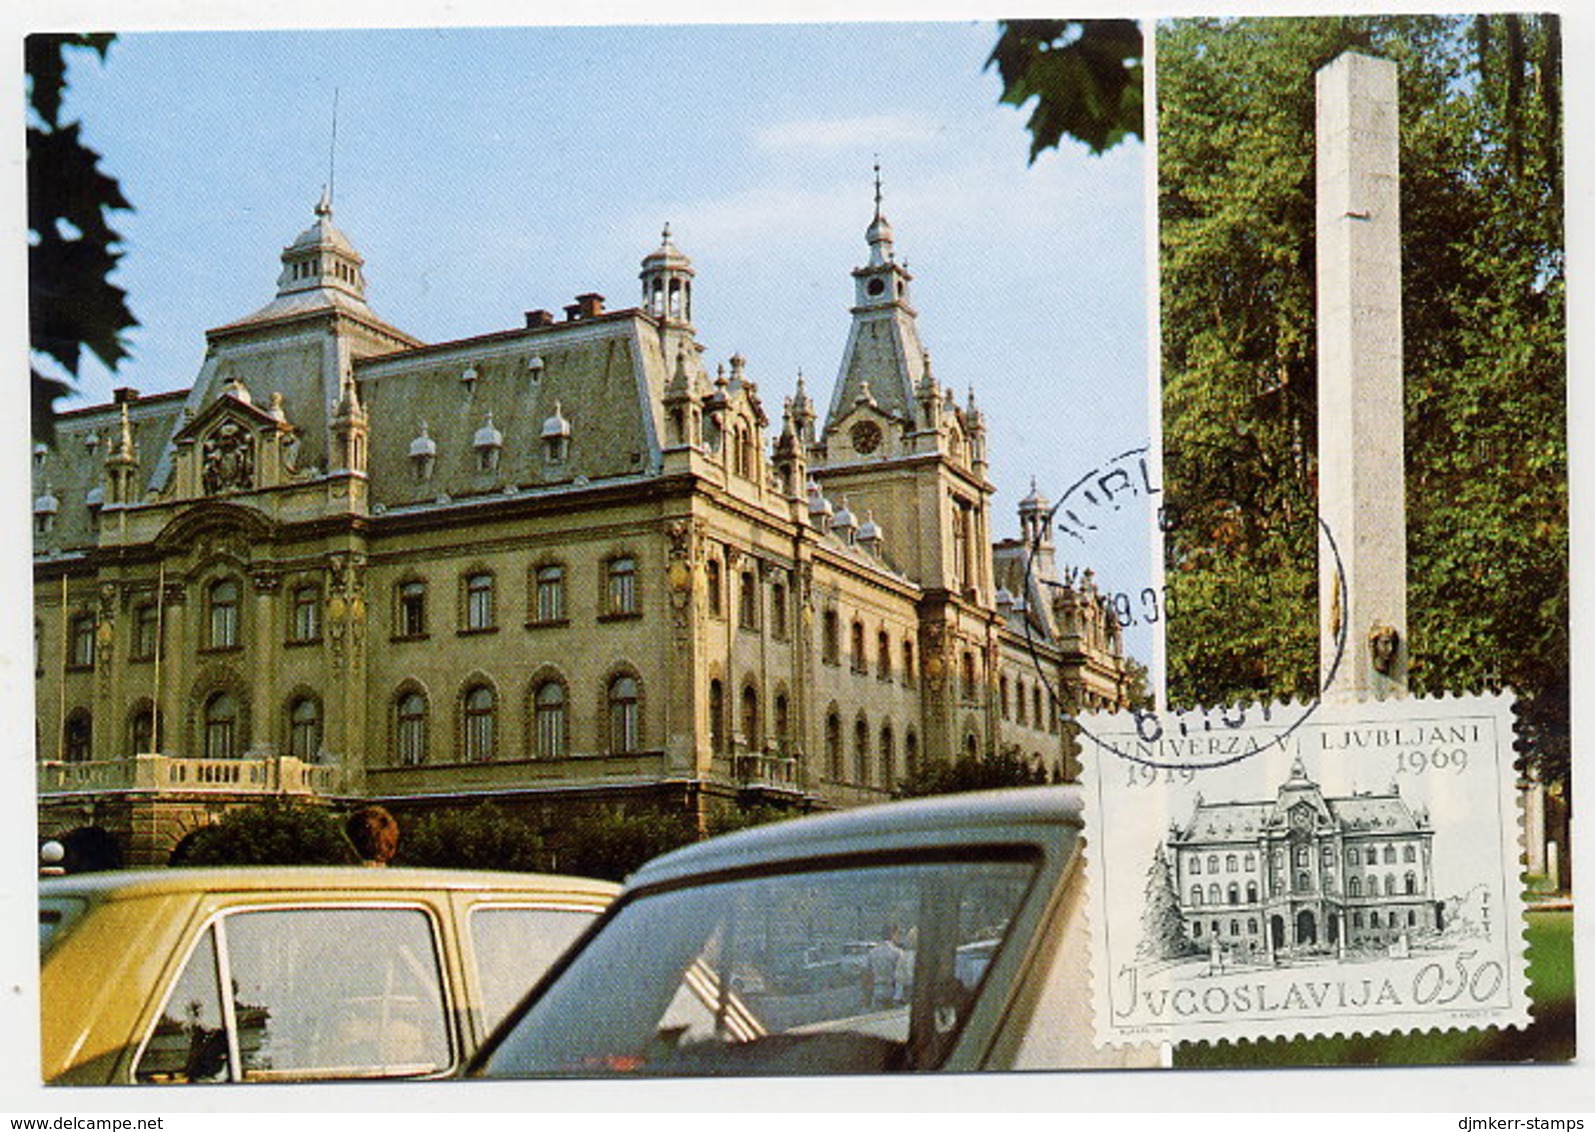 YUGOSLAVIA 1969 Ljubljana University On Maximum Card. Michel 1358 - Cartes-maximum